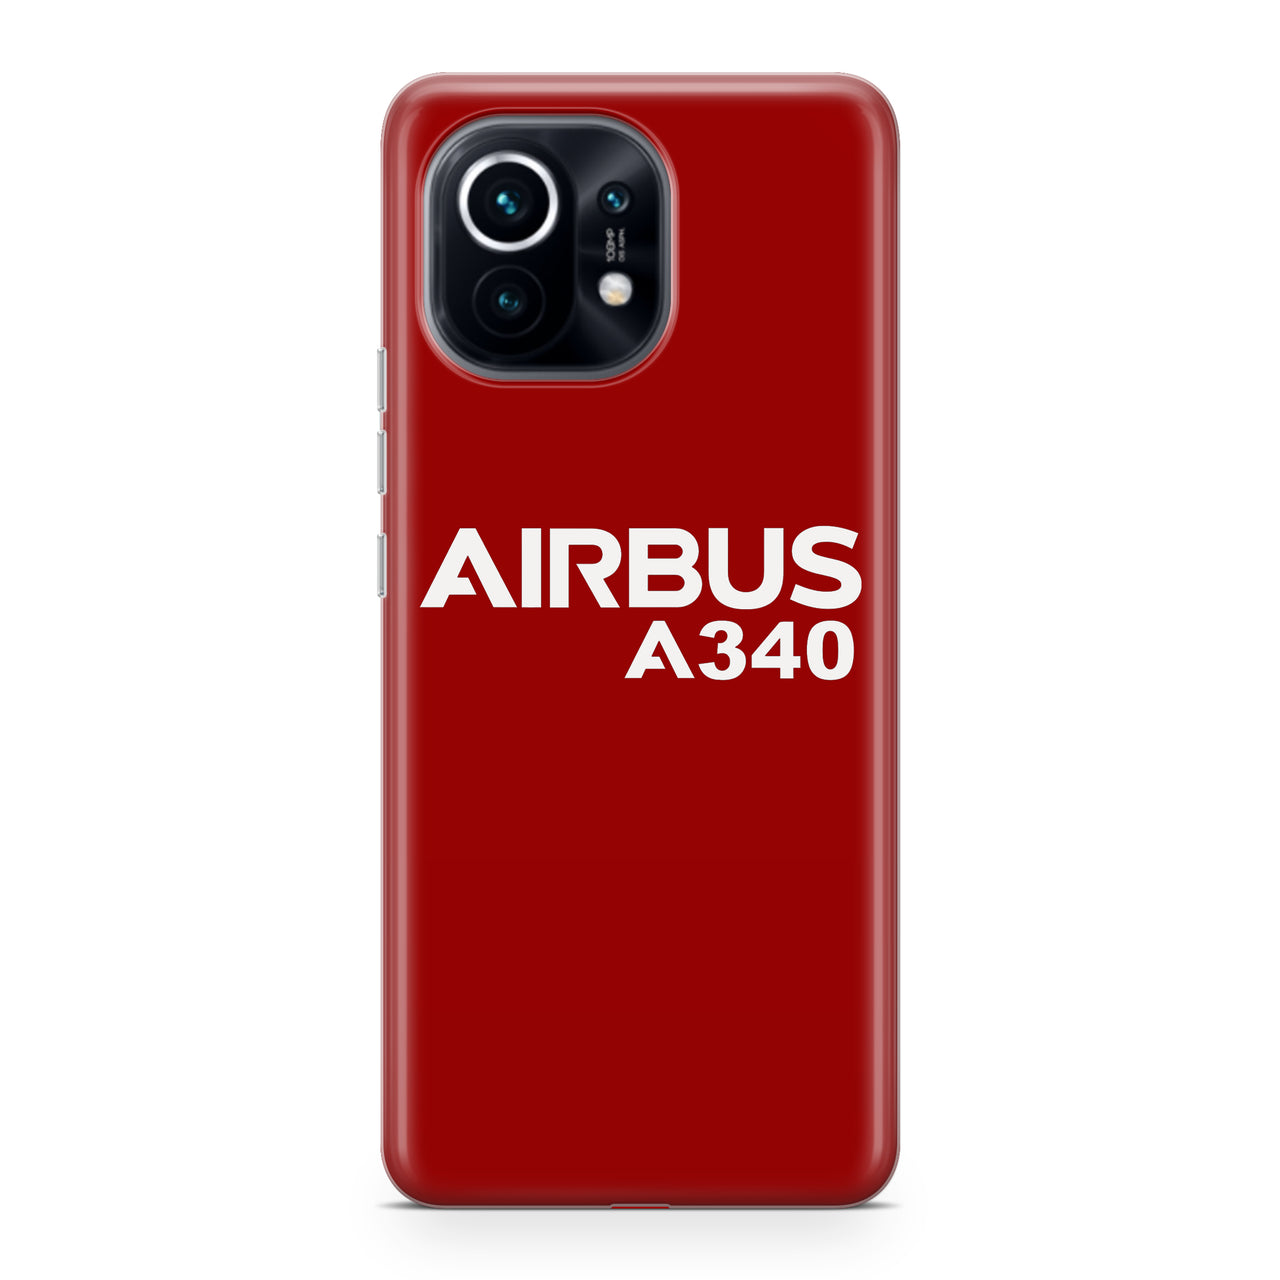 Airbus A340 & Text Designed Xiaomi Cases